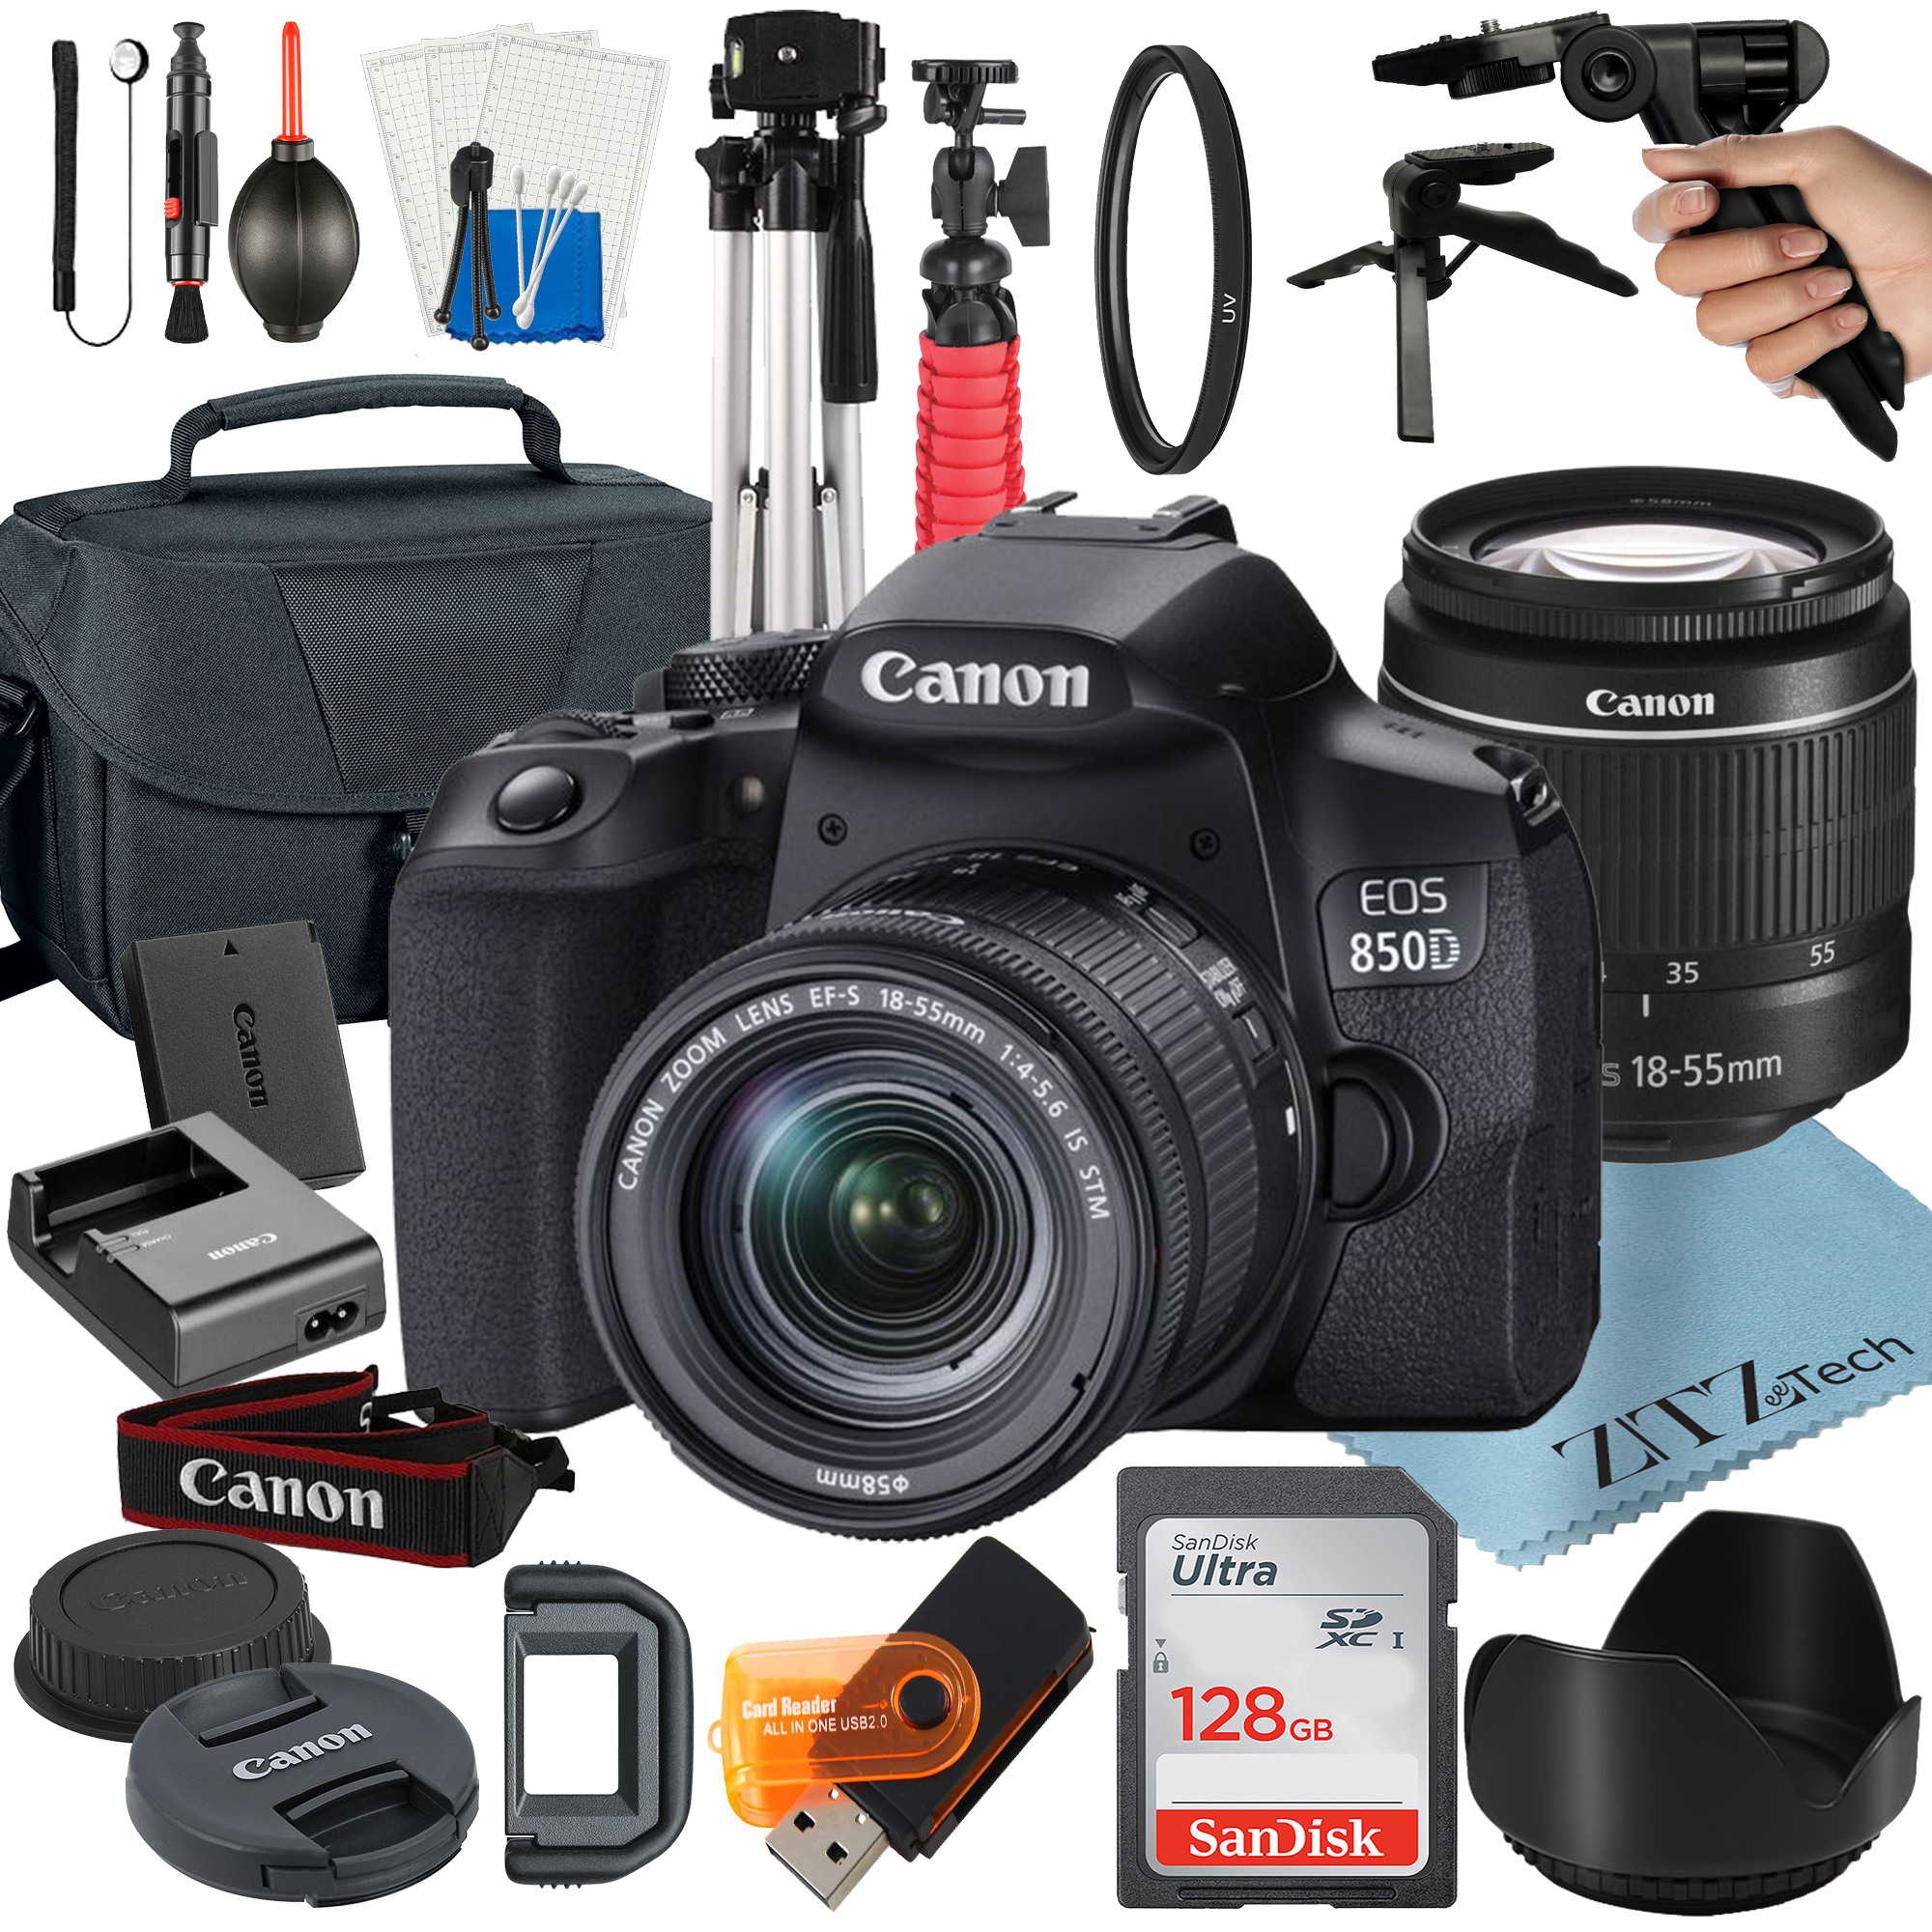 Canon EOS 850D / Rebel T8i DSLR Camera Bundle with 18-55mm Zoom Lens + 128GB SanDisk Card + Case + Tripod + ZeeTech Accessory